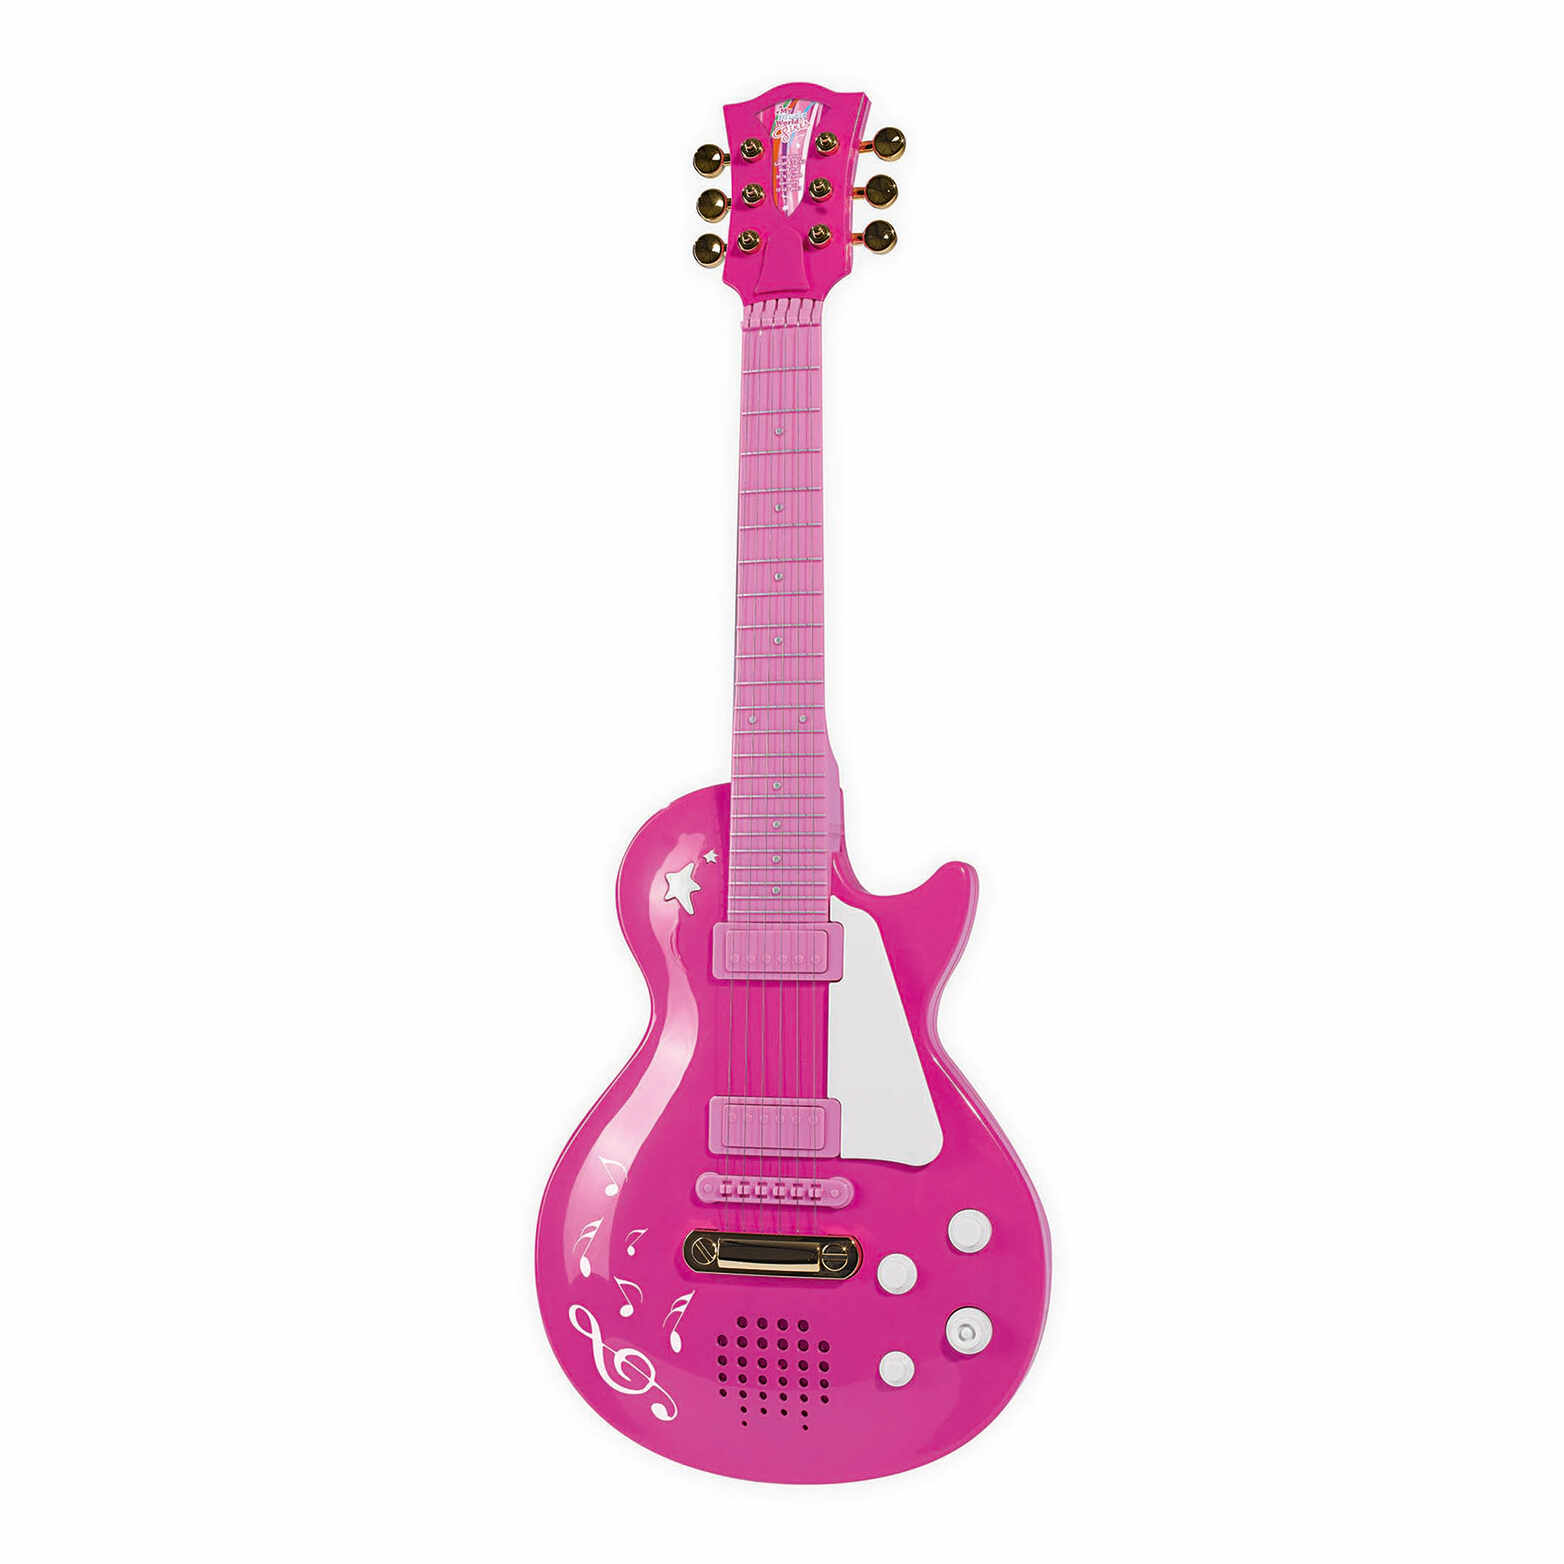 Chitara rock country cu functii audio Simba, 54 cm, roz